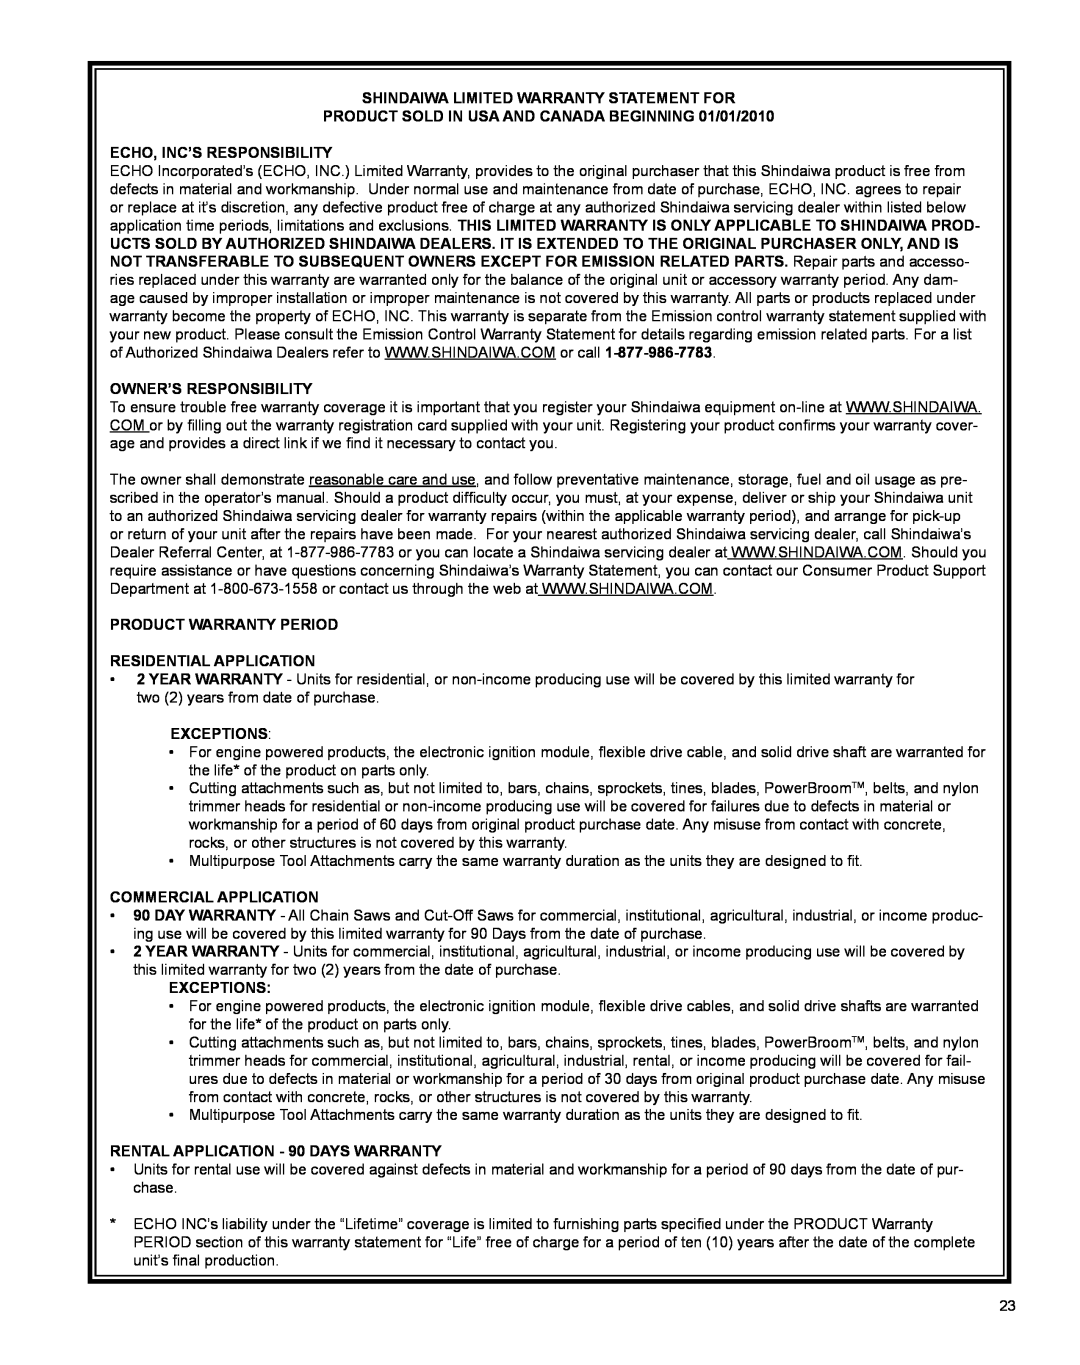 Shindaiwa AH242es manual Shindaiwa Limited Warranty Statement For, PRODUCT SOLD IN USA AND CANADA BEGINNING 01/01/2010 